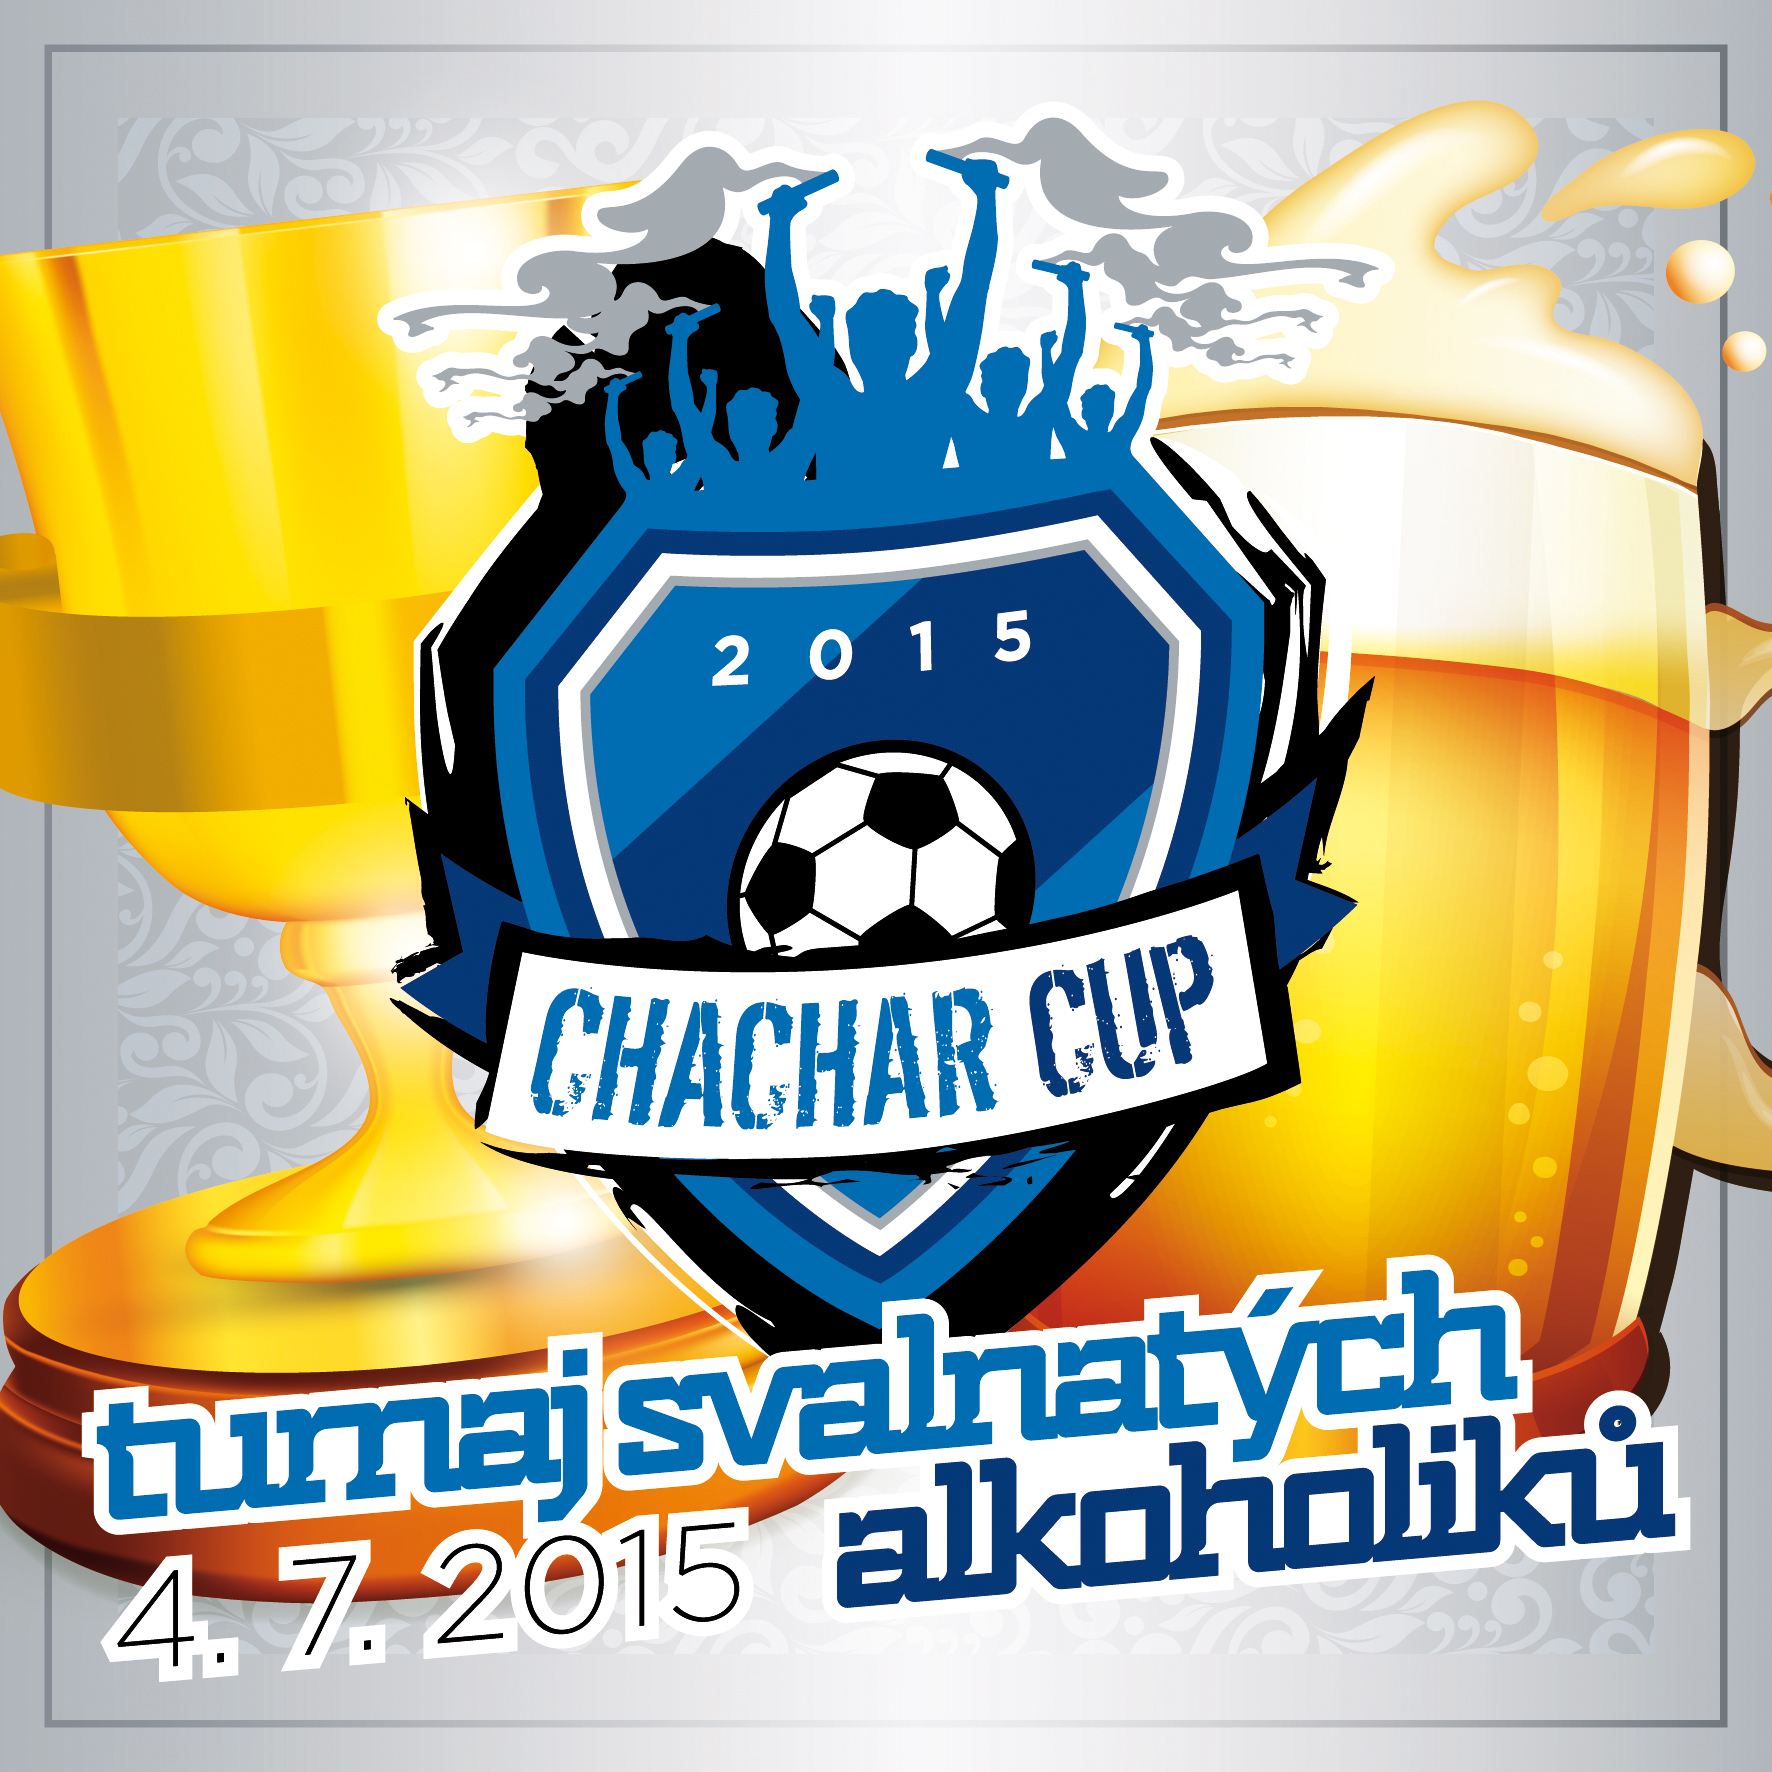 CHACHAR CUP 2015 - výsledky